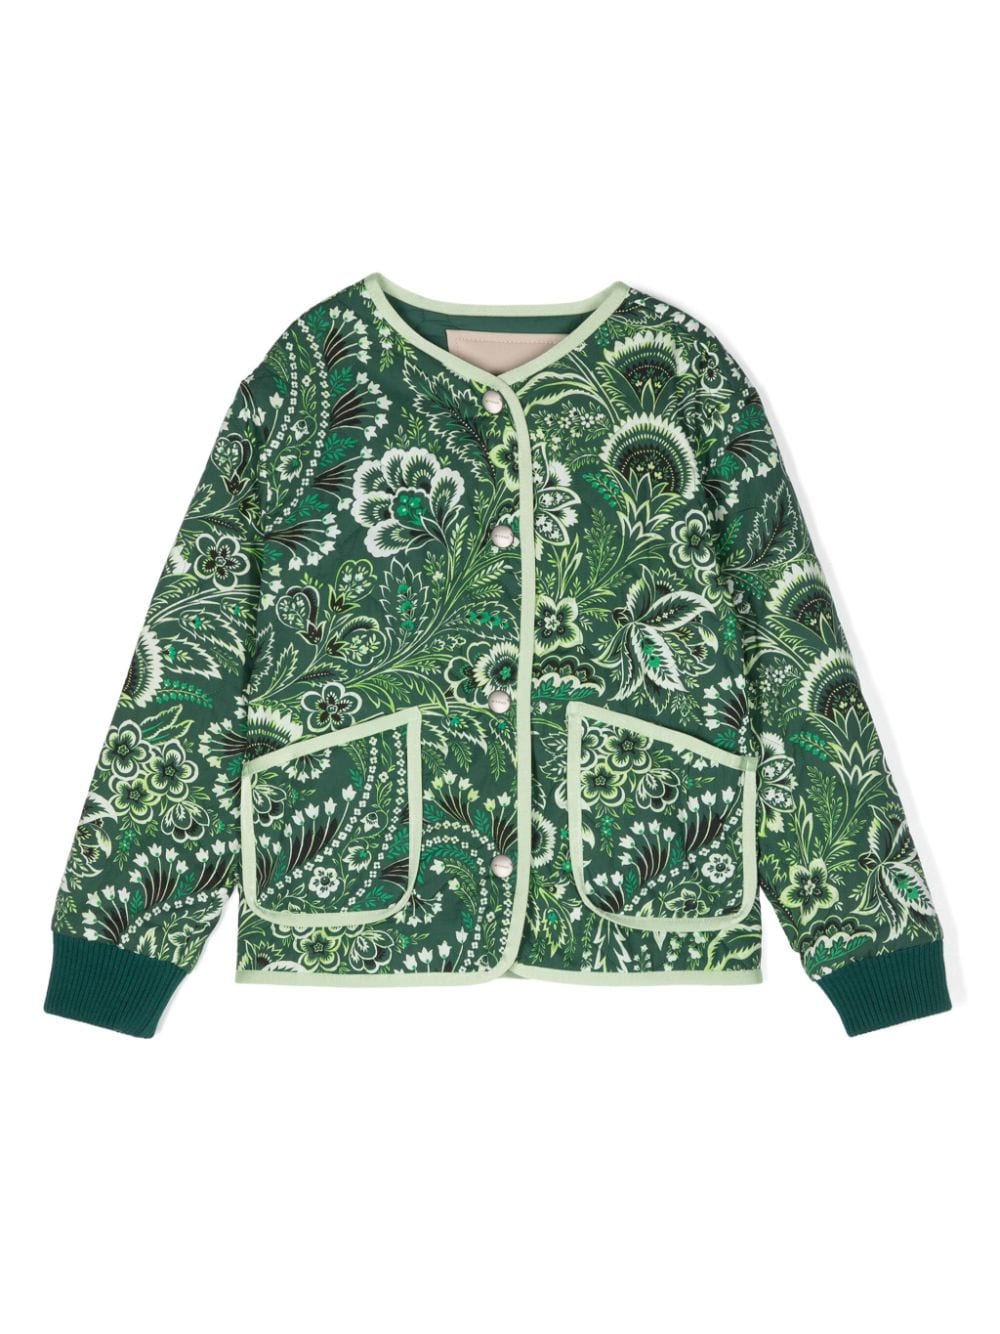 ETRO KIDS floral-print jacket - Green